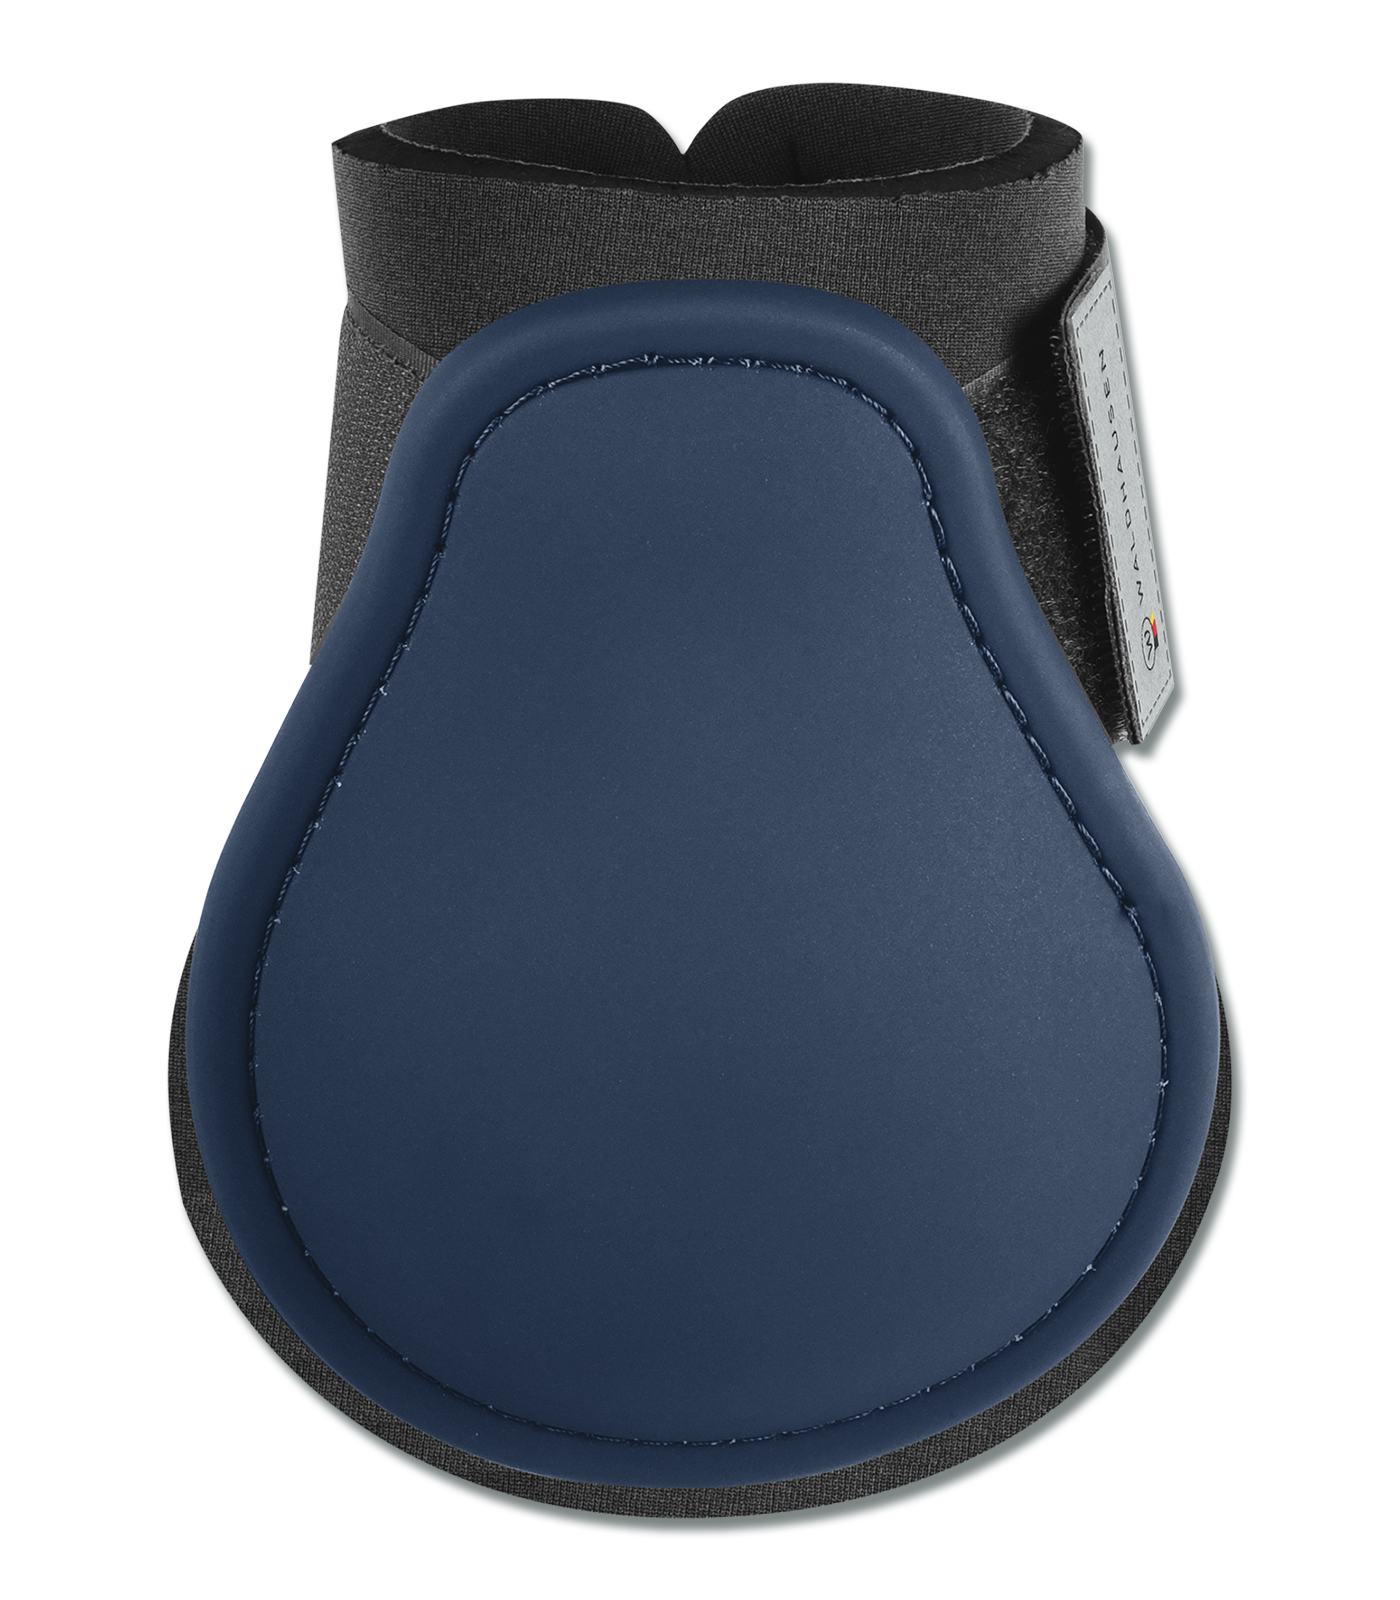 Basic Hind Boots, pair dark blue